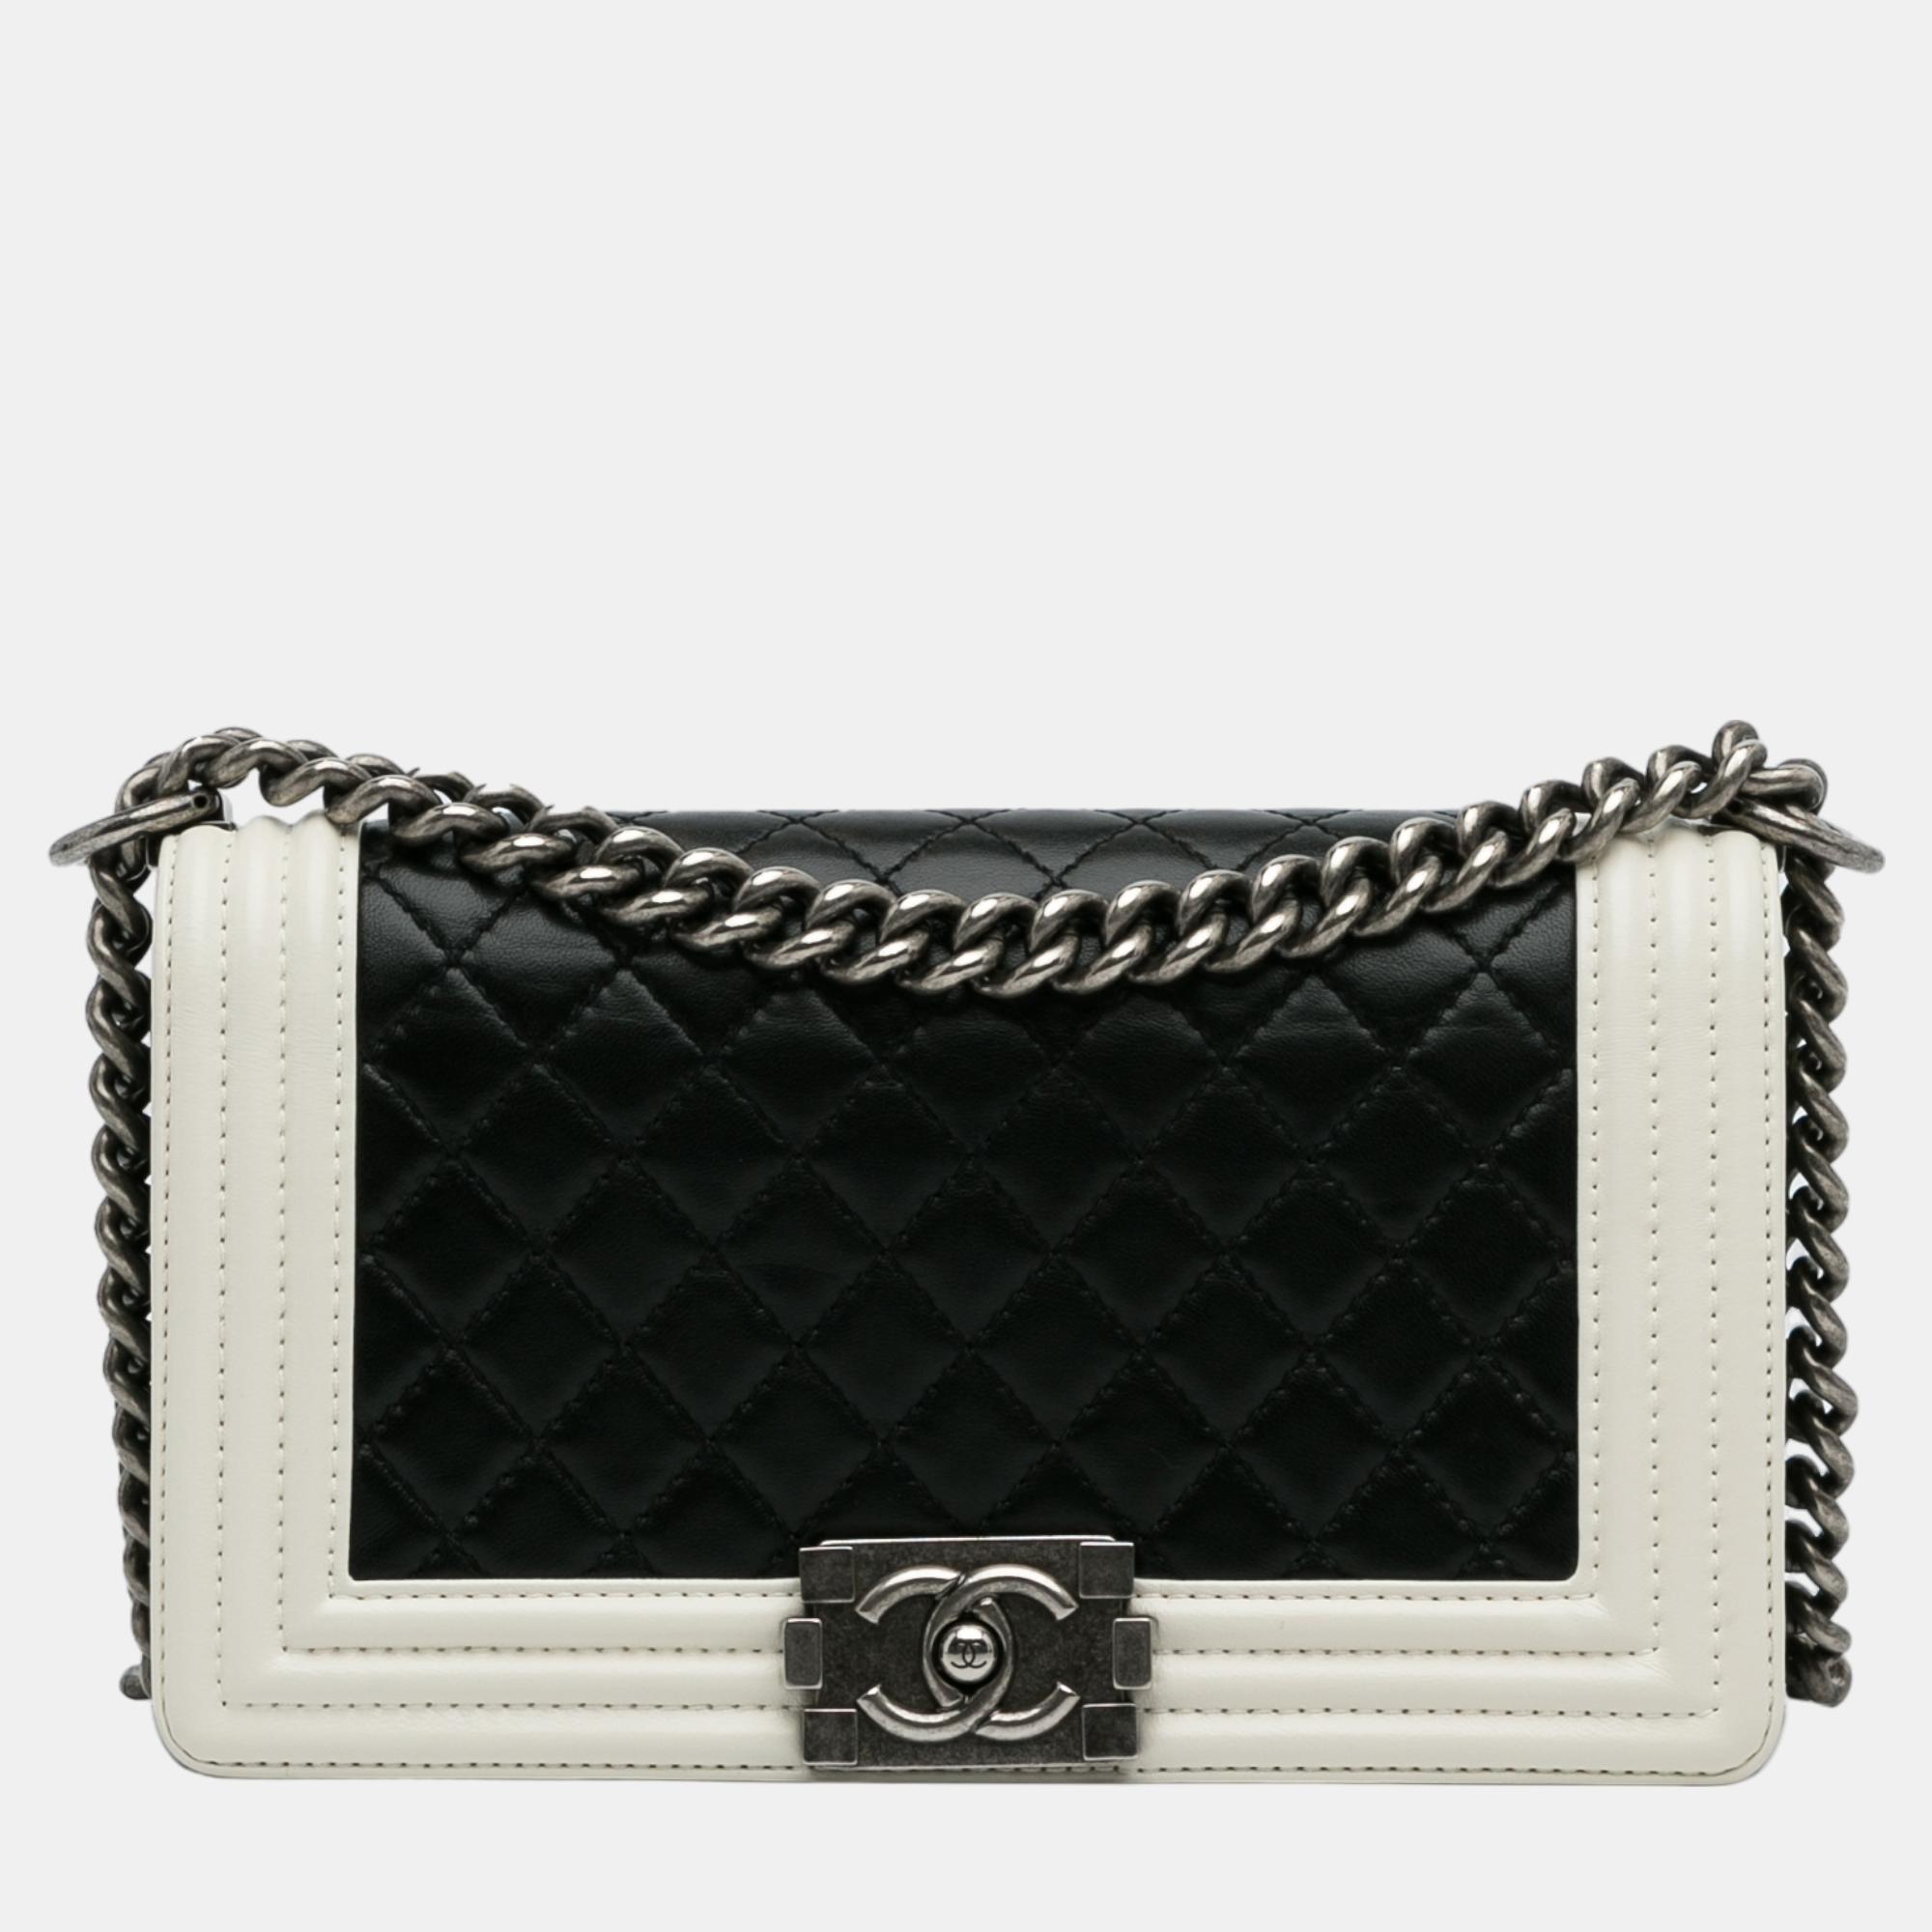 Chanel black/white medium lambskin boy bicolor flap bag